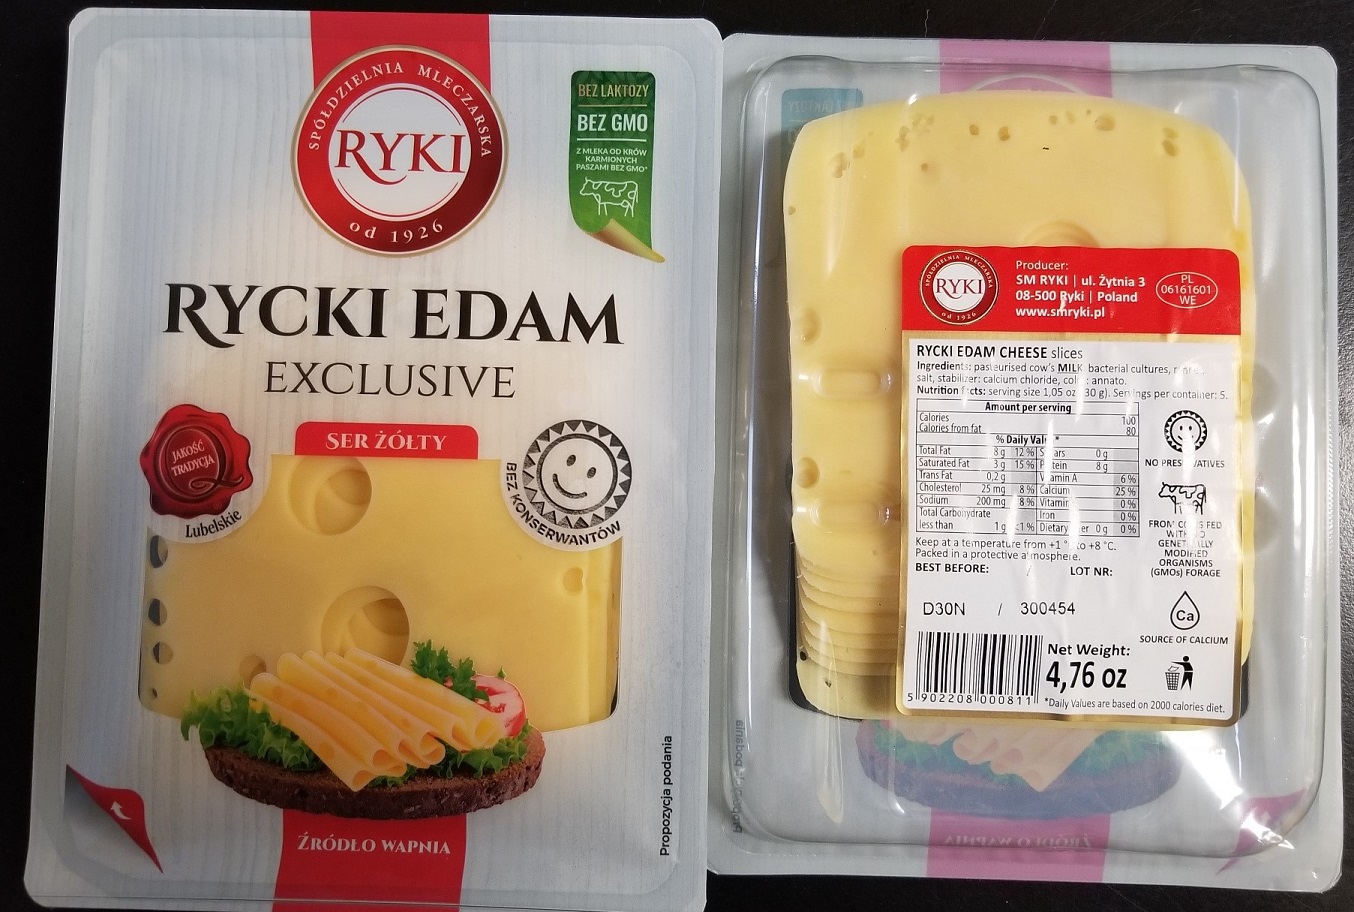 CFIA/ACIA Updated Food Recall Warning - Ryki brand Rycki Edam Cheese Slices recalled due to Listeria monocytogenes